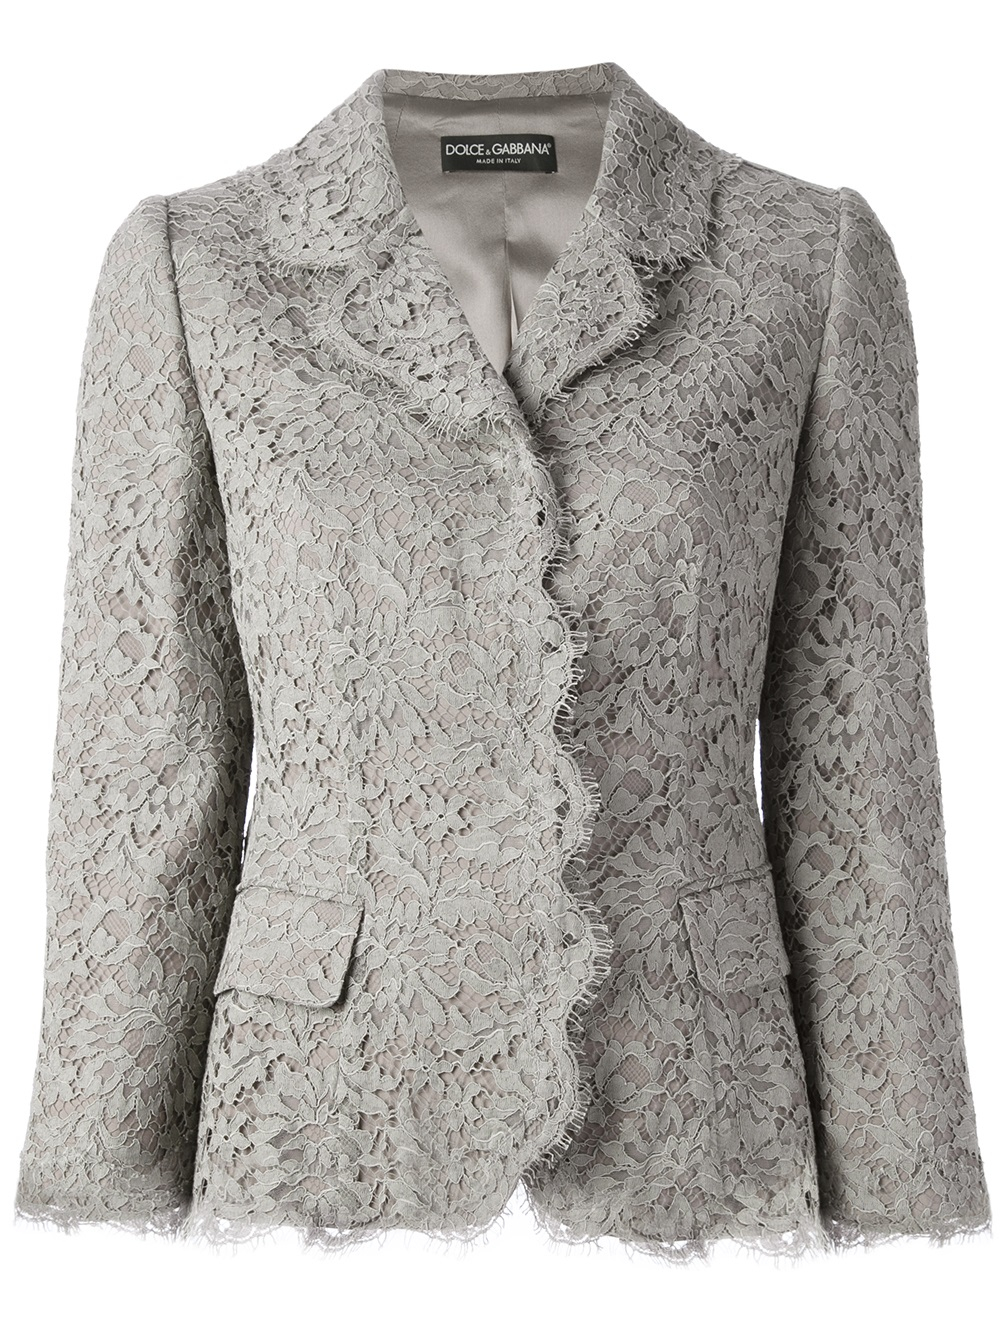 Dolce & Gabbana Floral Lace Blazer in Grey (Gray) - Lyst